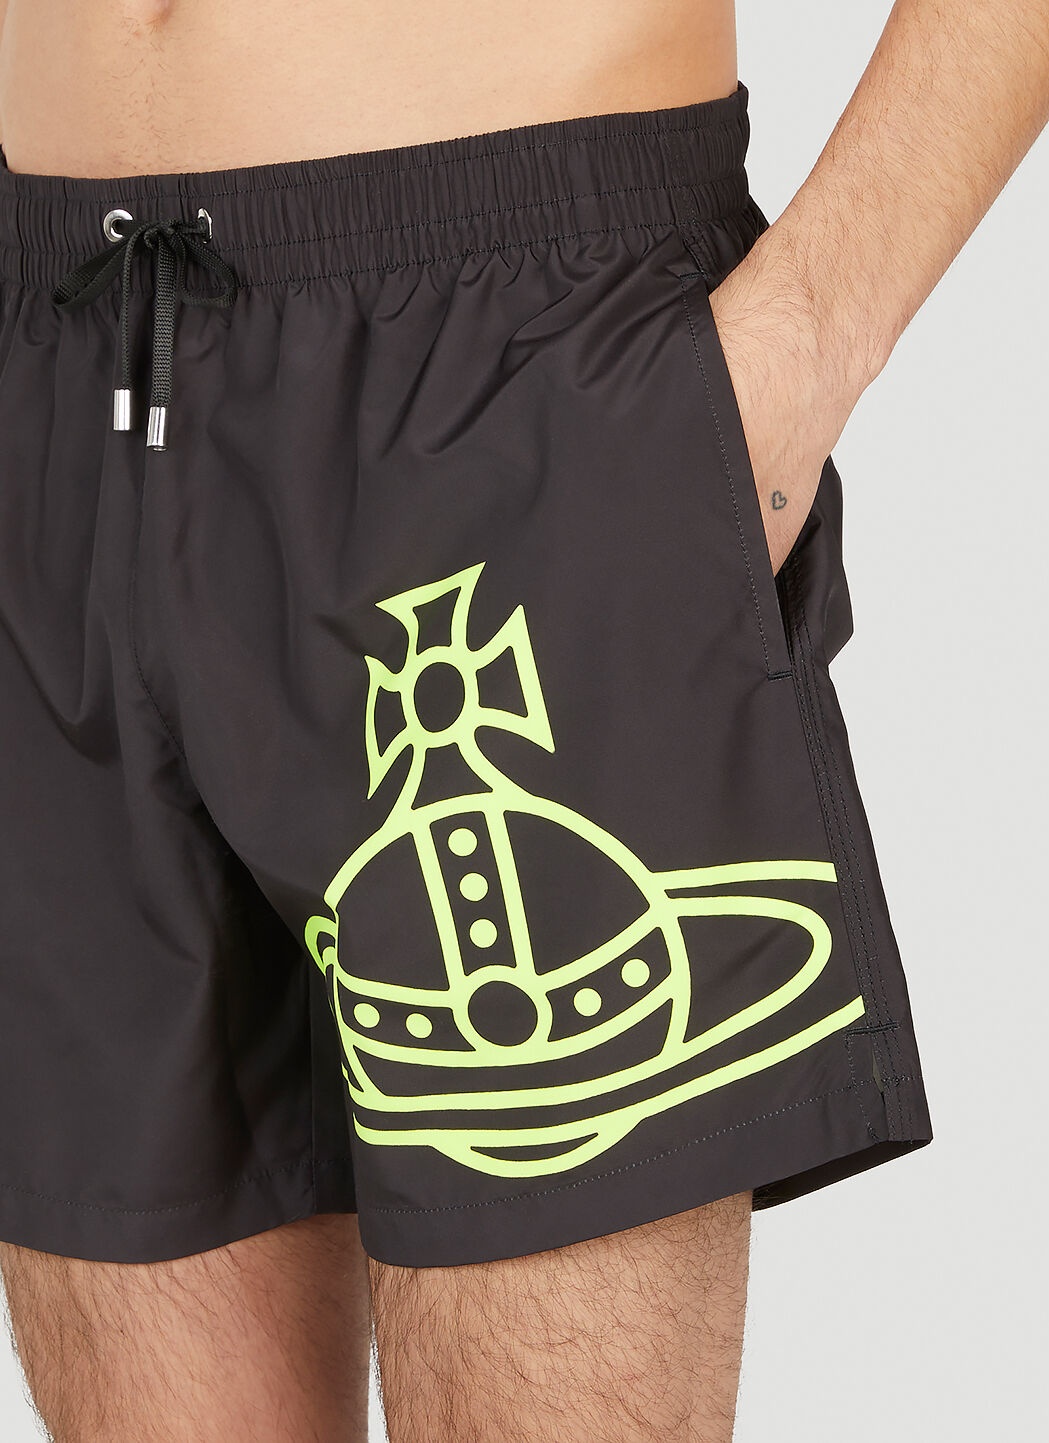 Orb Swim Shorts - 5